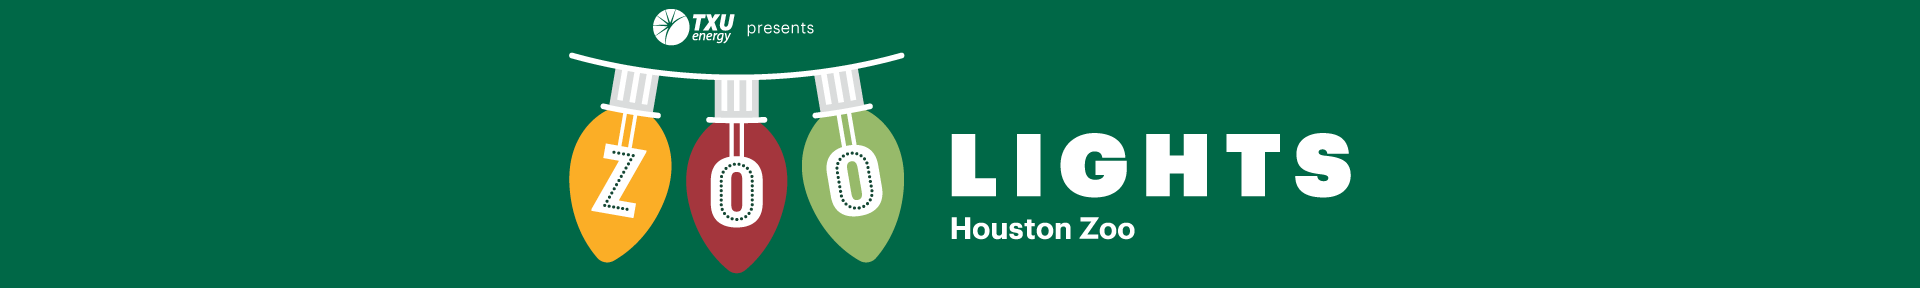 Zoo Lights at Houston Zoo